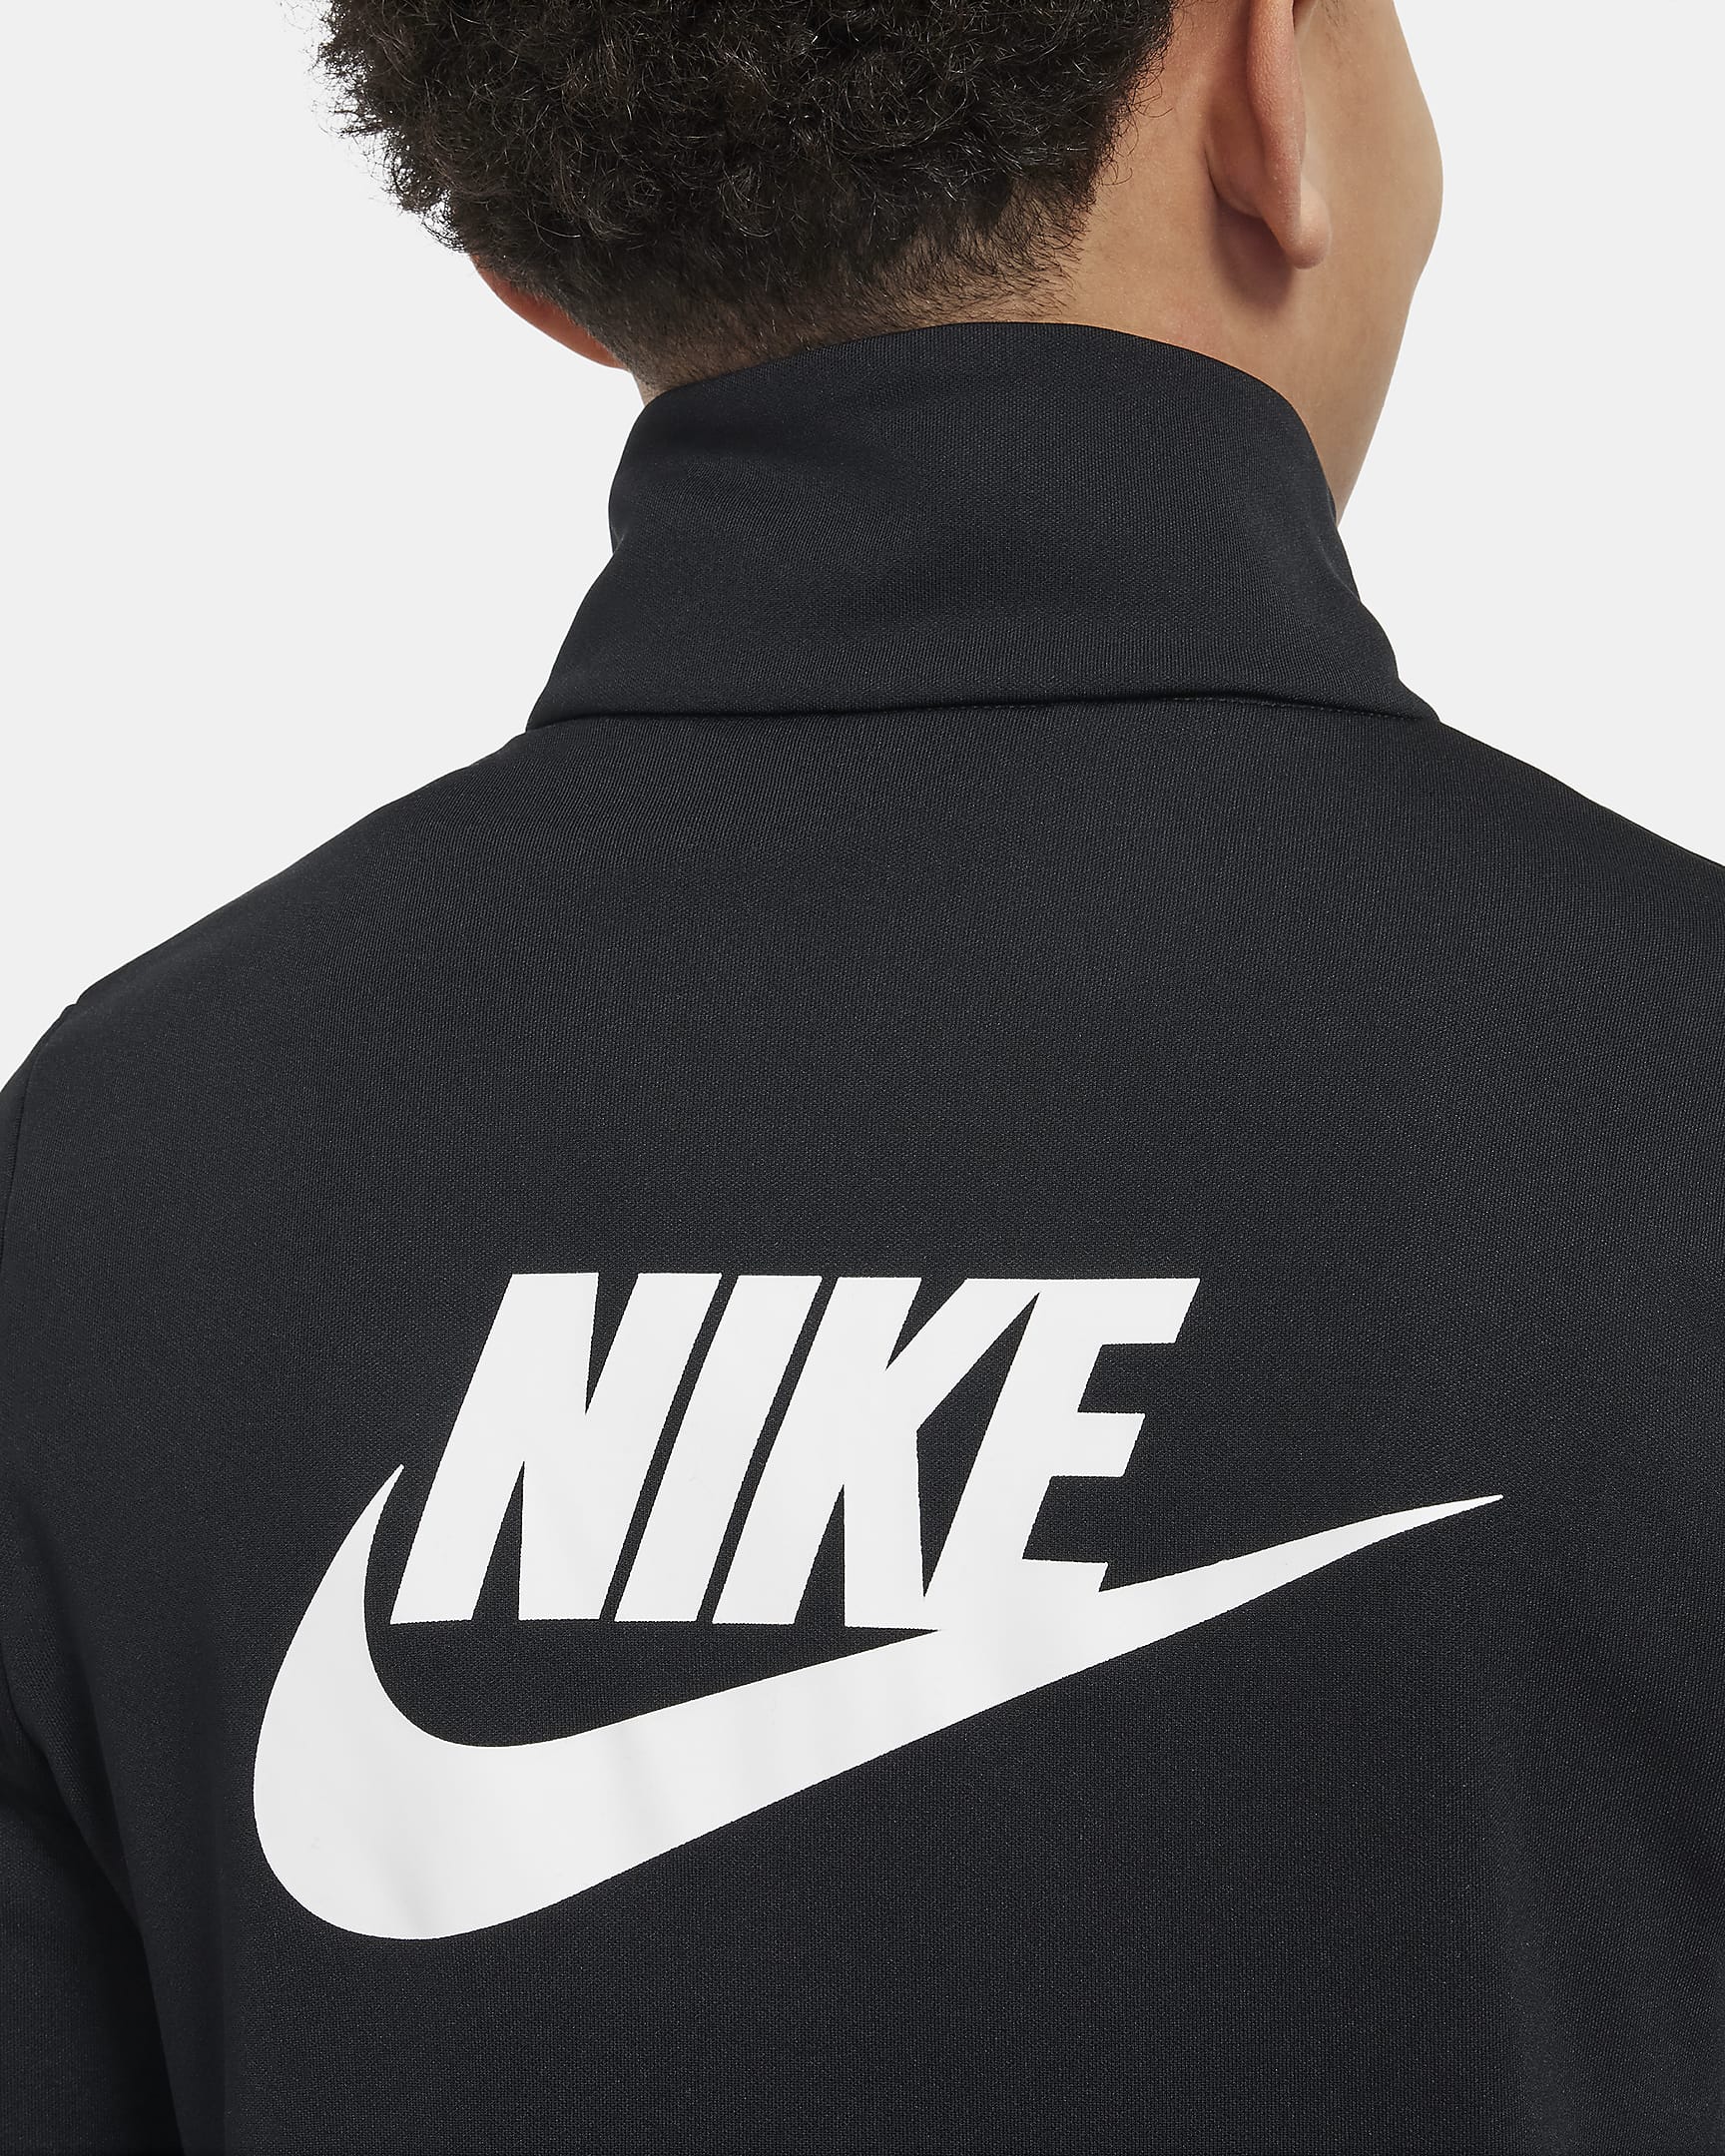 Tracksuit Nike Sportswear för ungdom - Svart/Svart/Vit